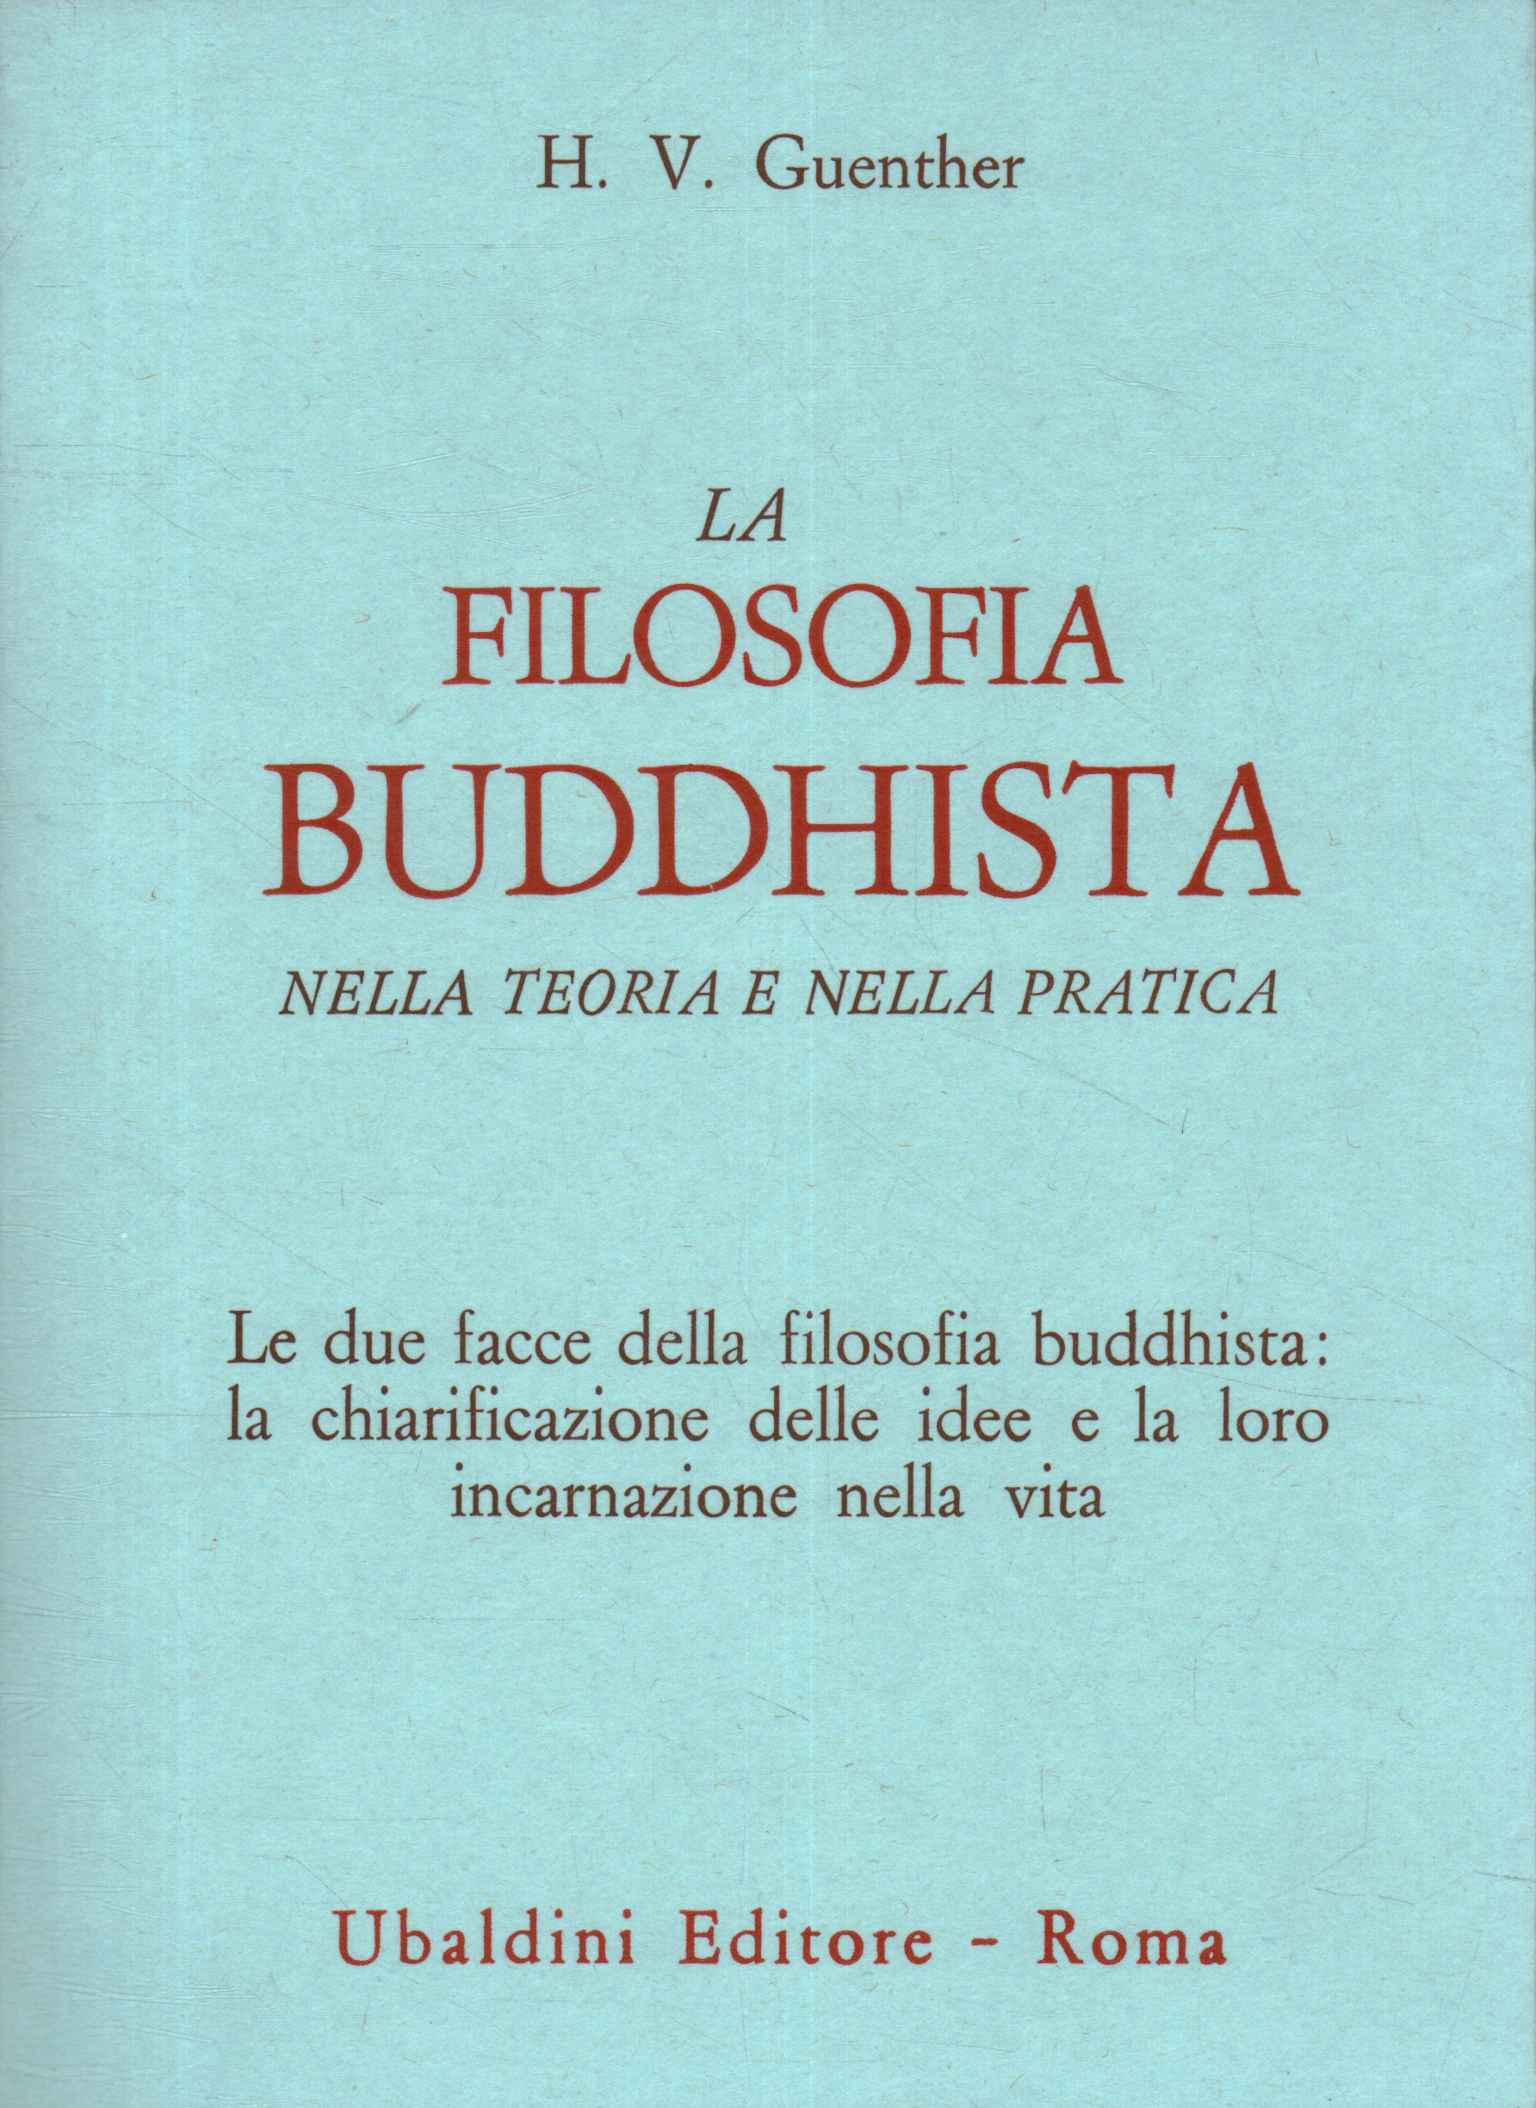 Buddhist philosophy